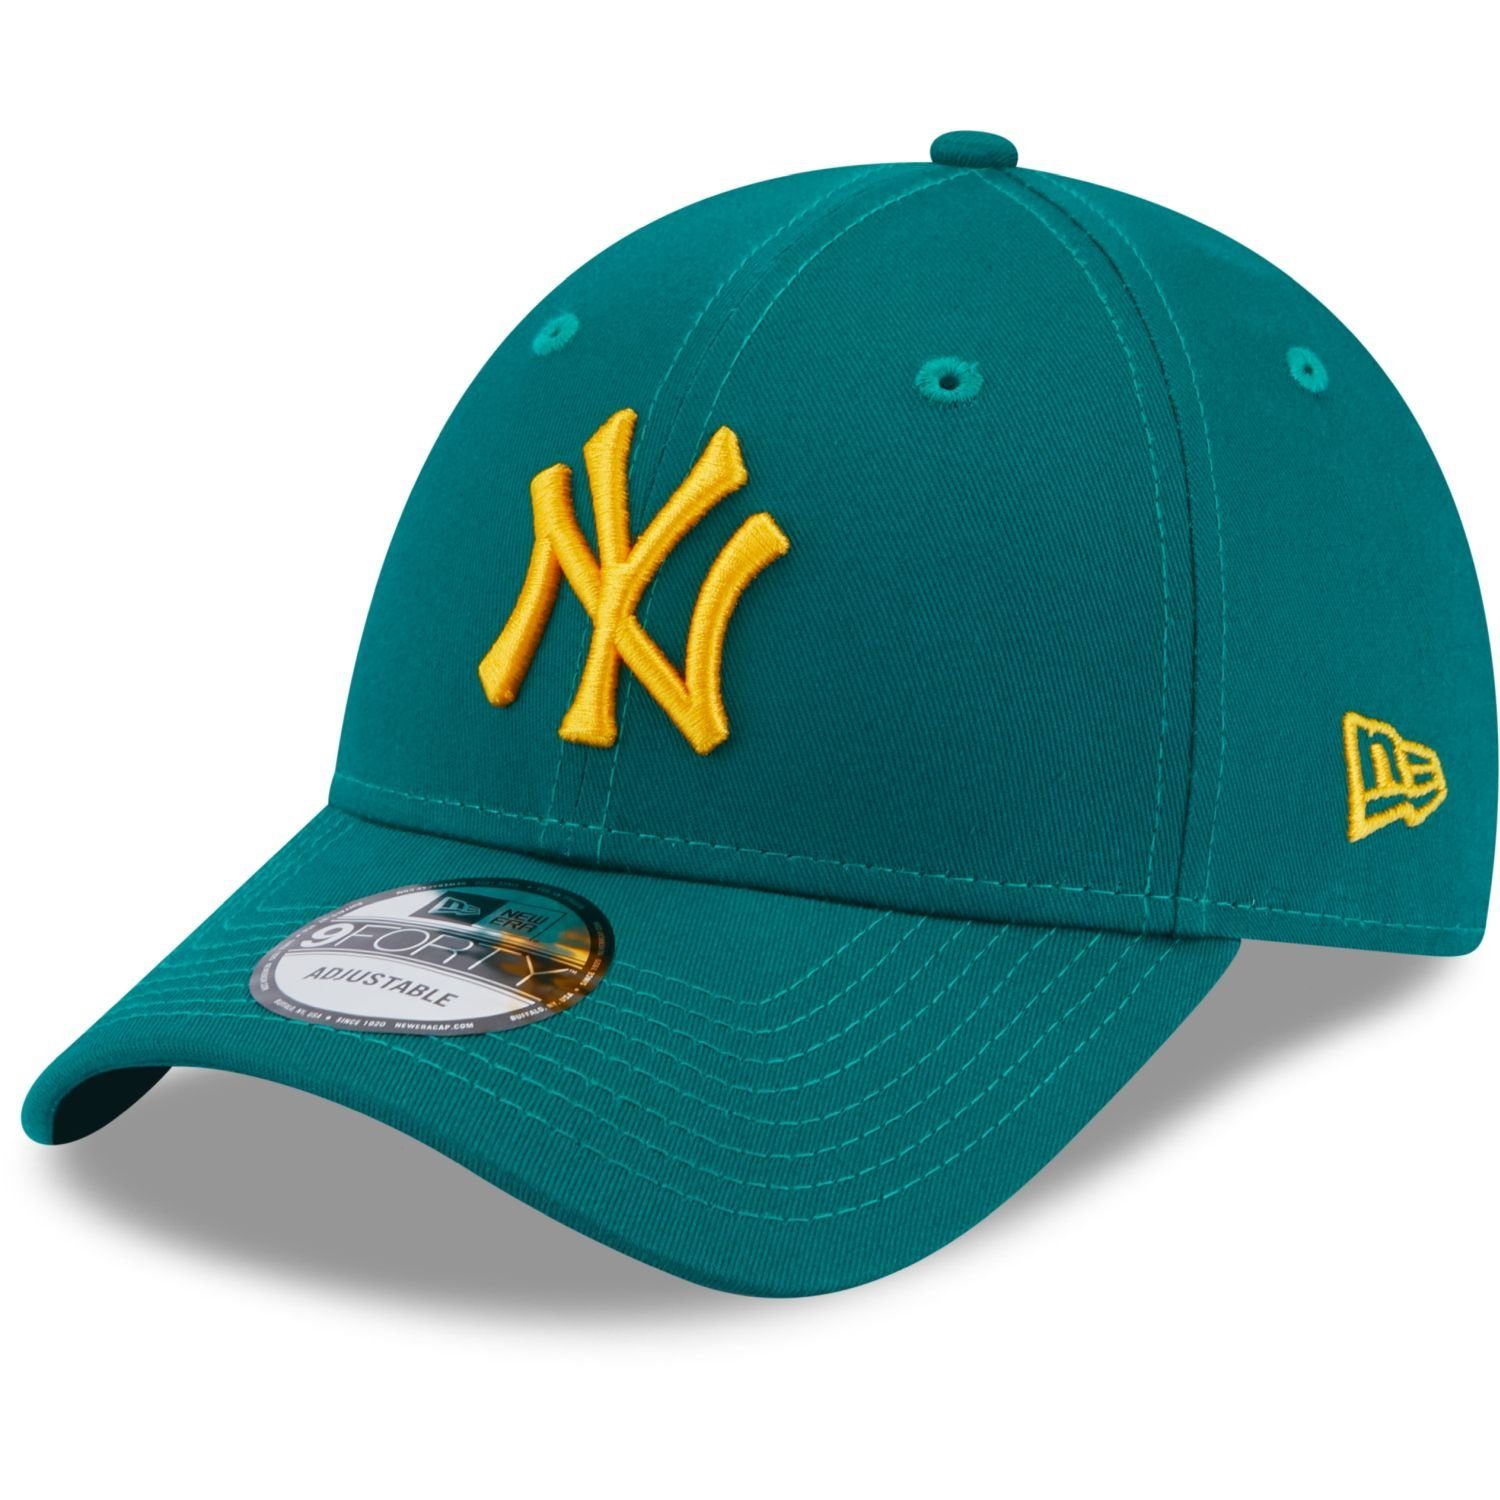 New Era Baseball Cap 9Forty Strapback New York Yankees blaugrün dunkelgrün